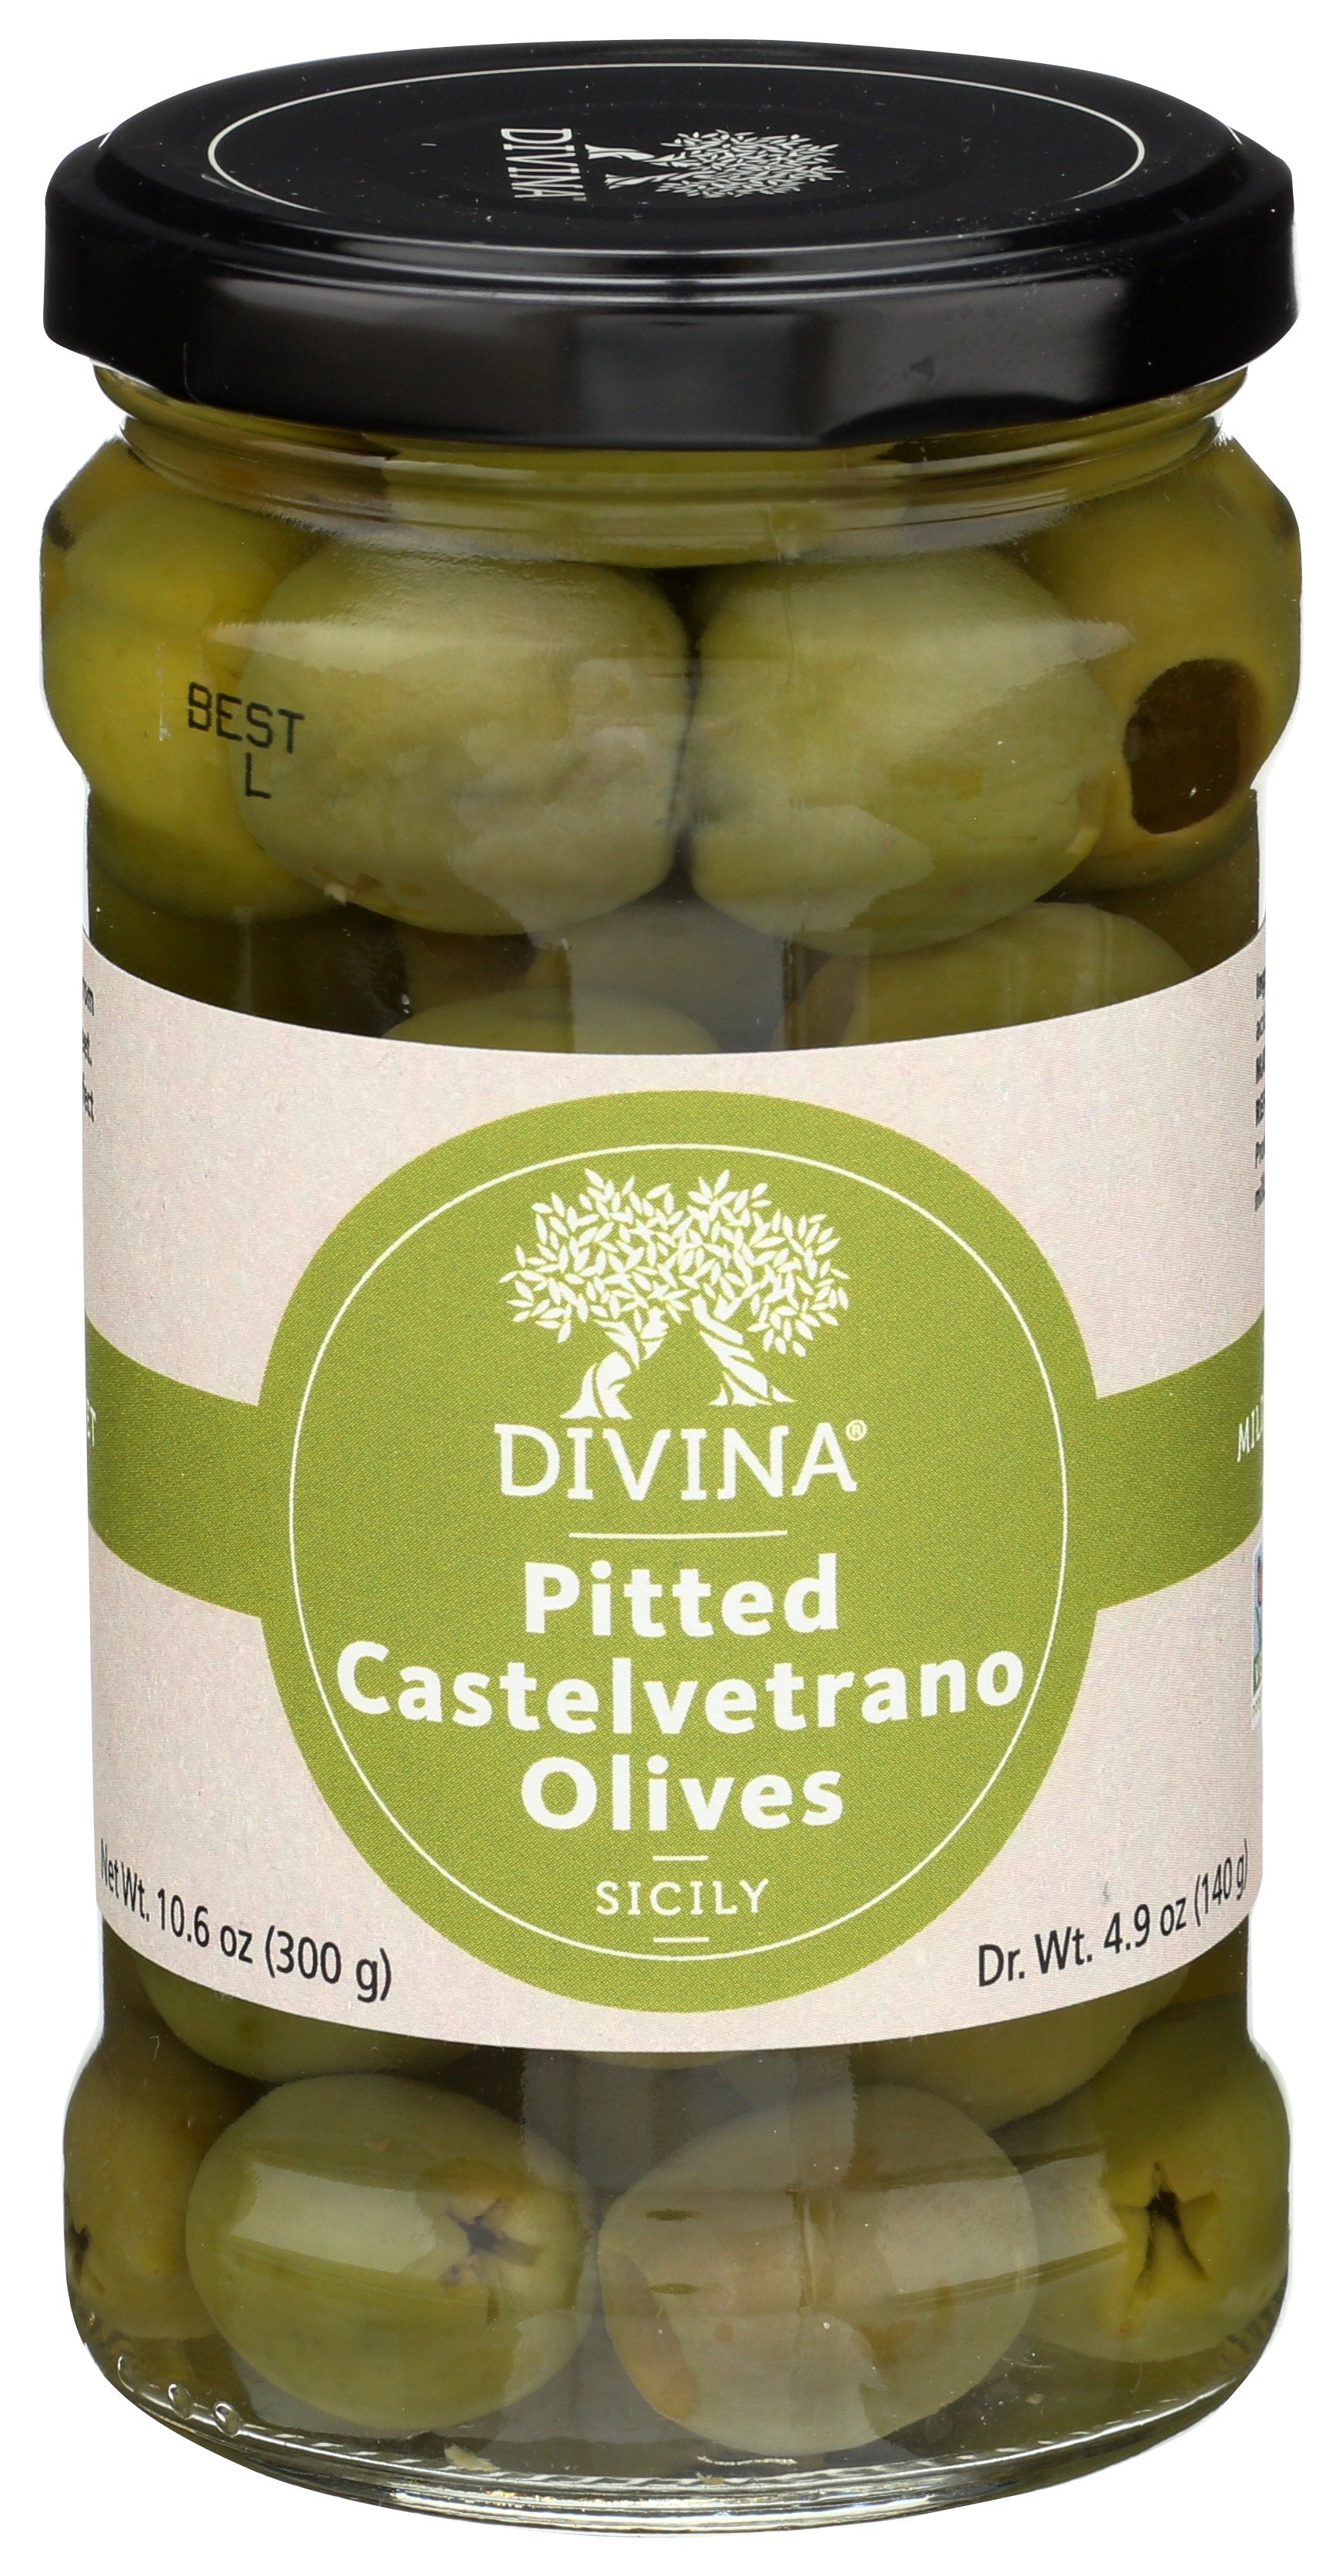 DIVINA OLIVE CASTELVATRANO PITD - Case of 6